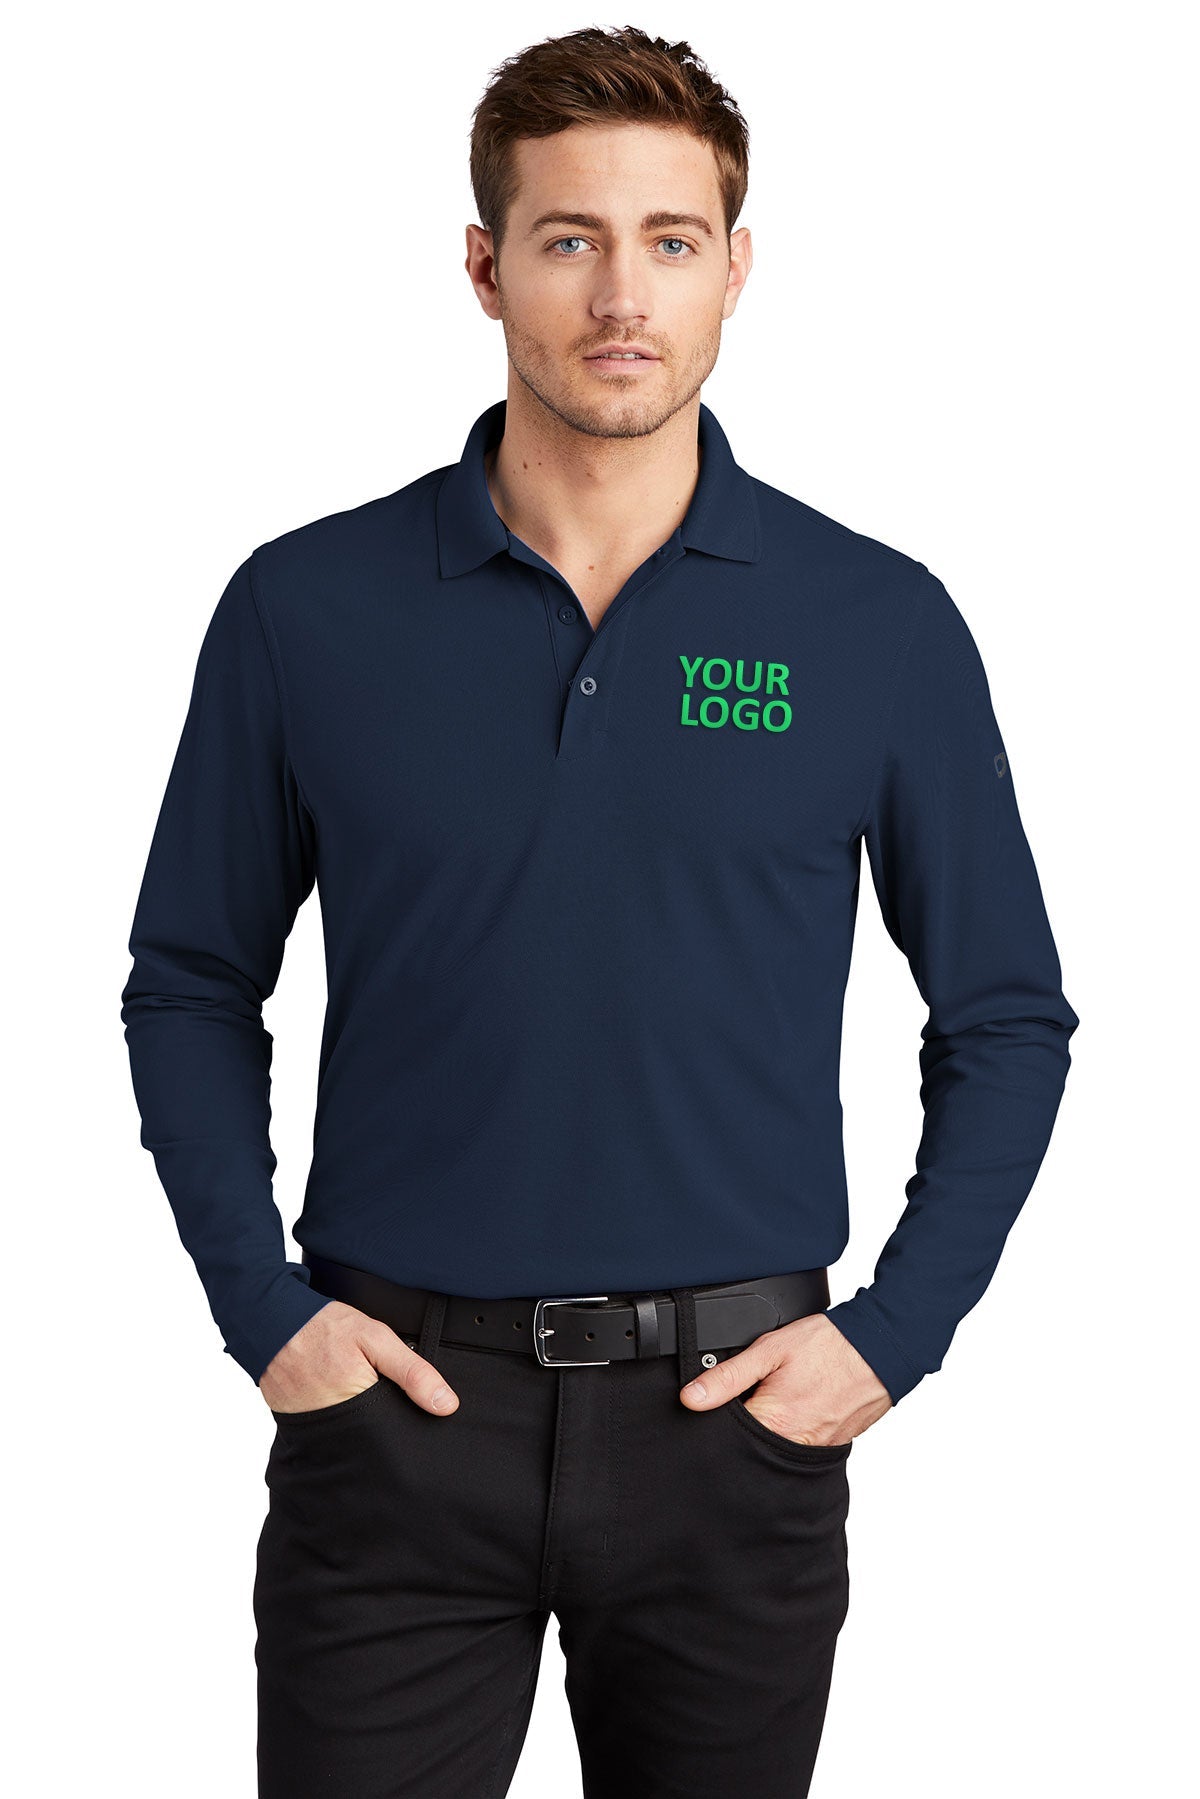 OGIO Navy OG105 polo shirts with company logo